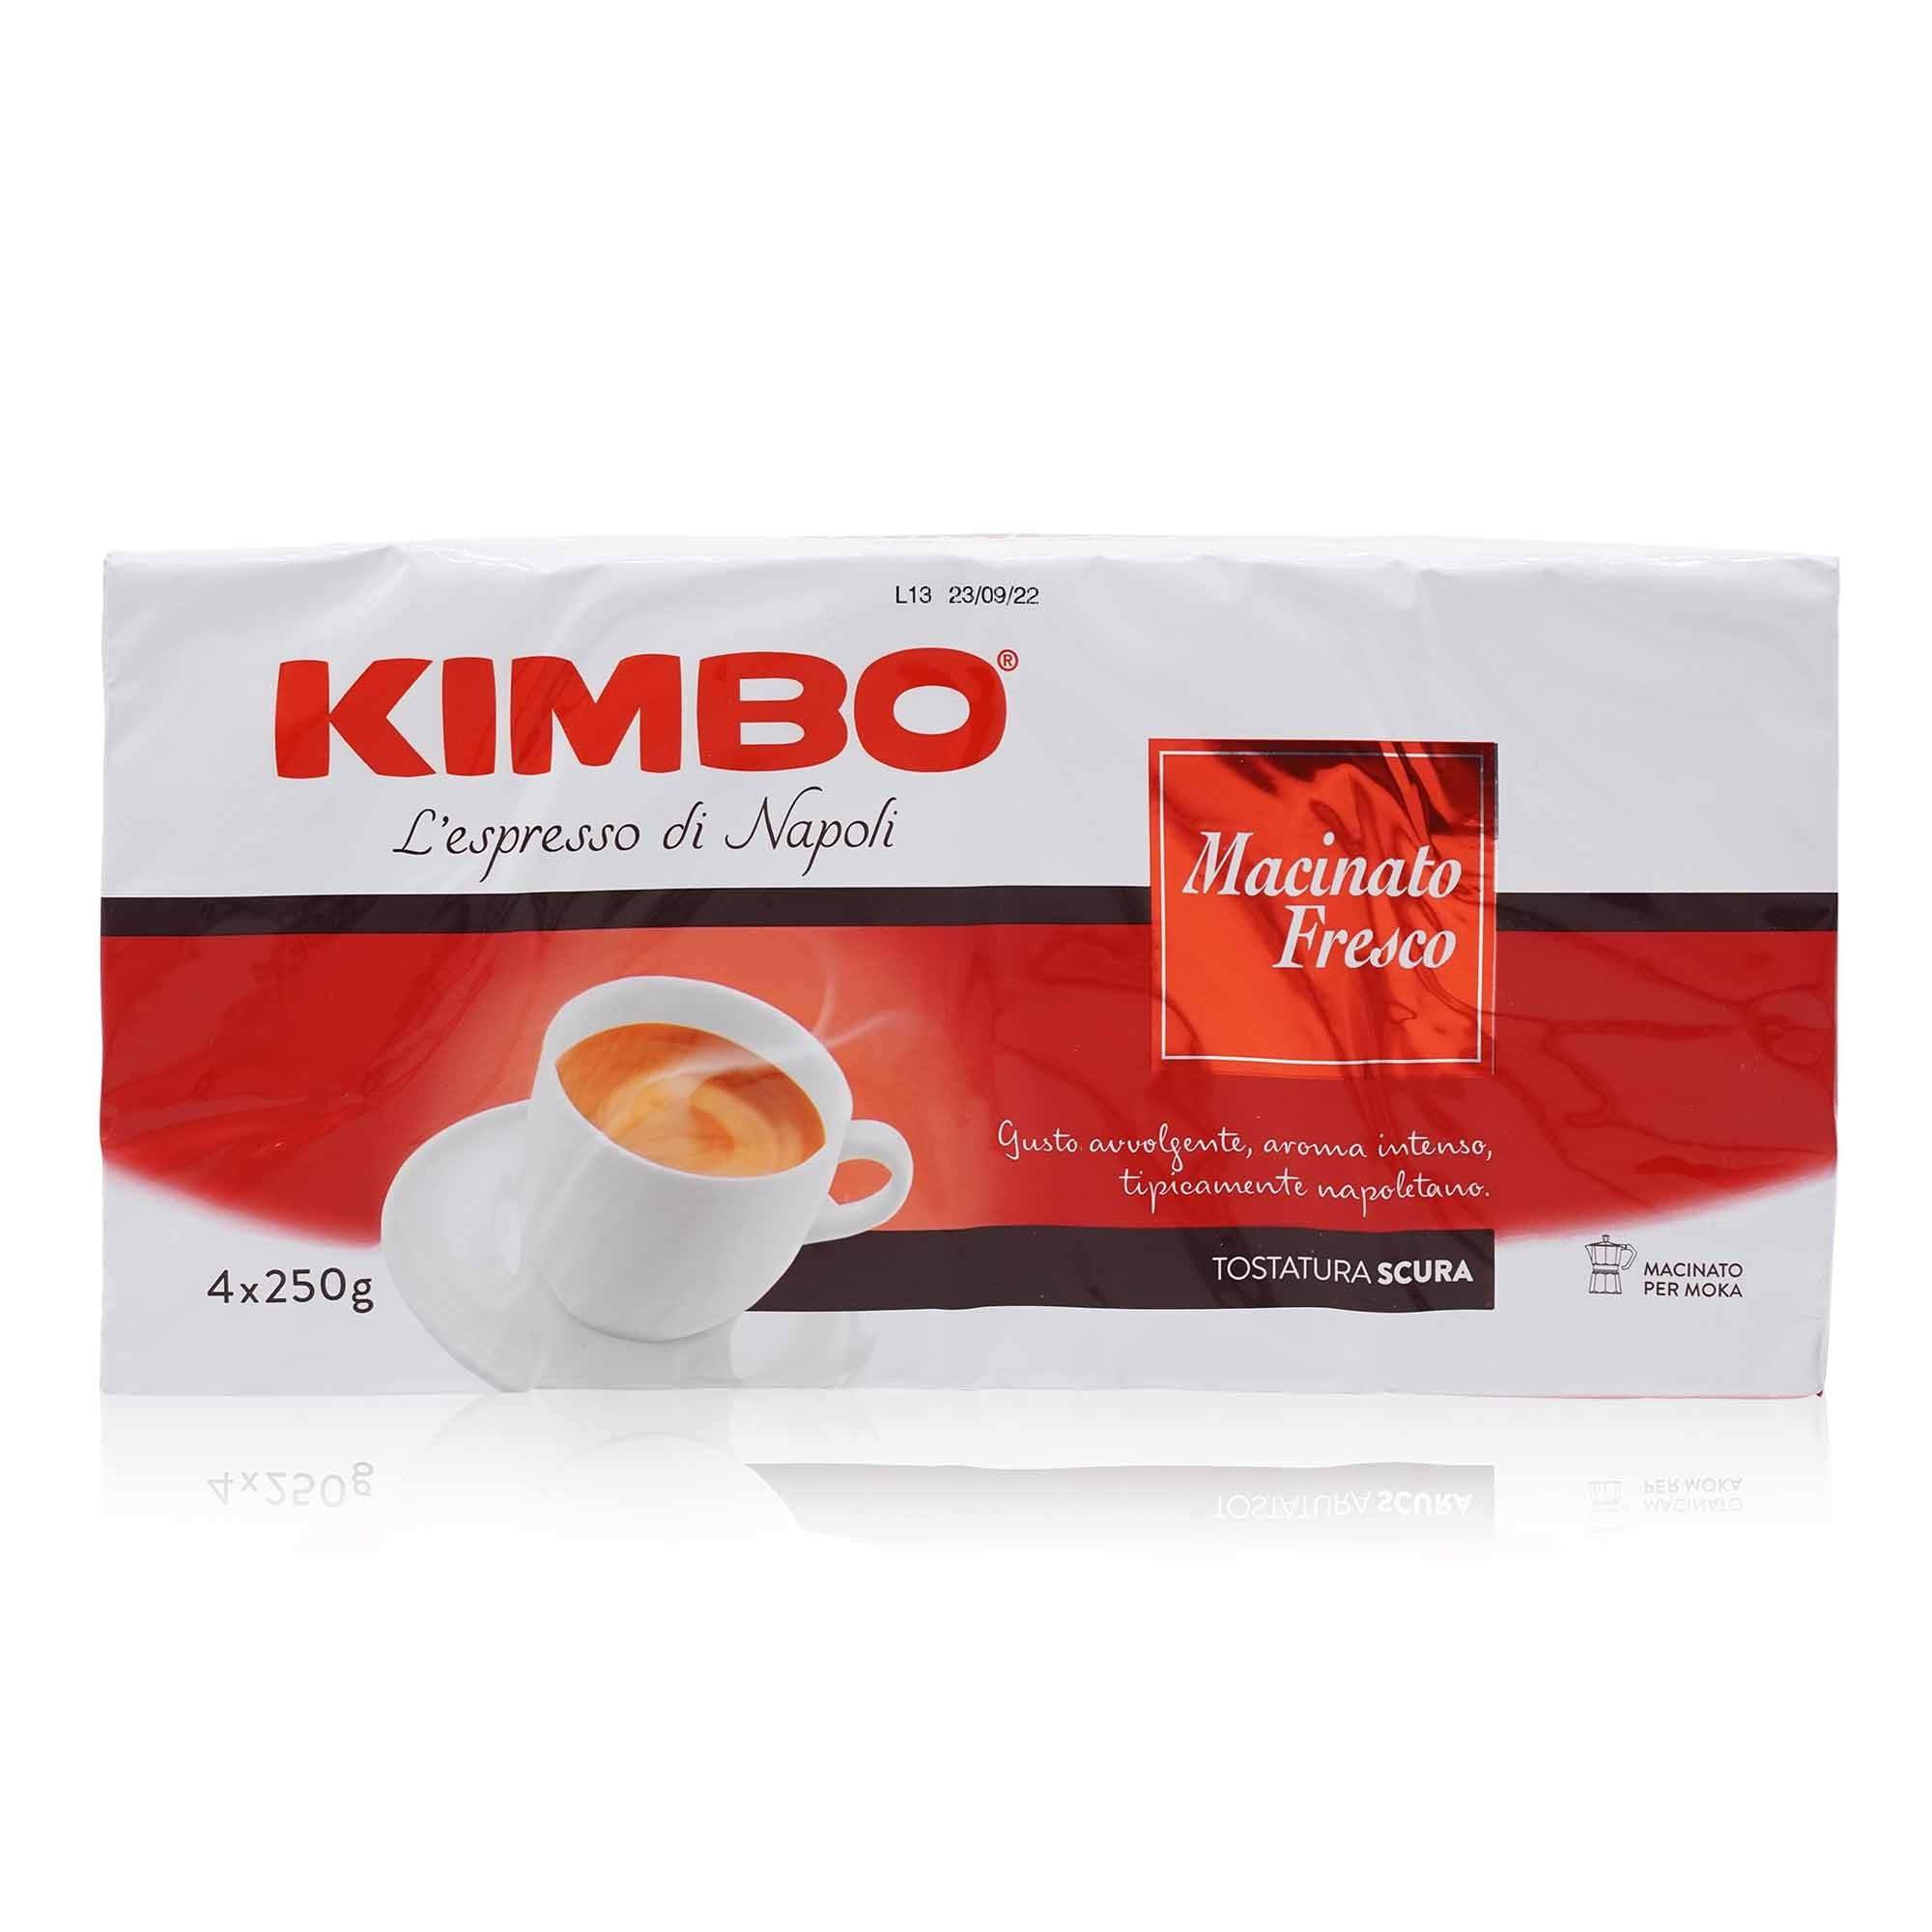 KIMBO Espresso Macinato Fresco – Kaffeeespresso gemahlen - 1kg